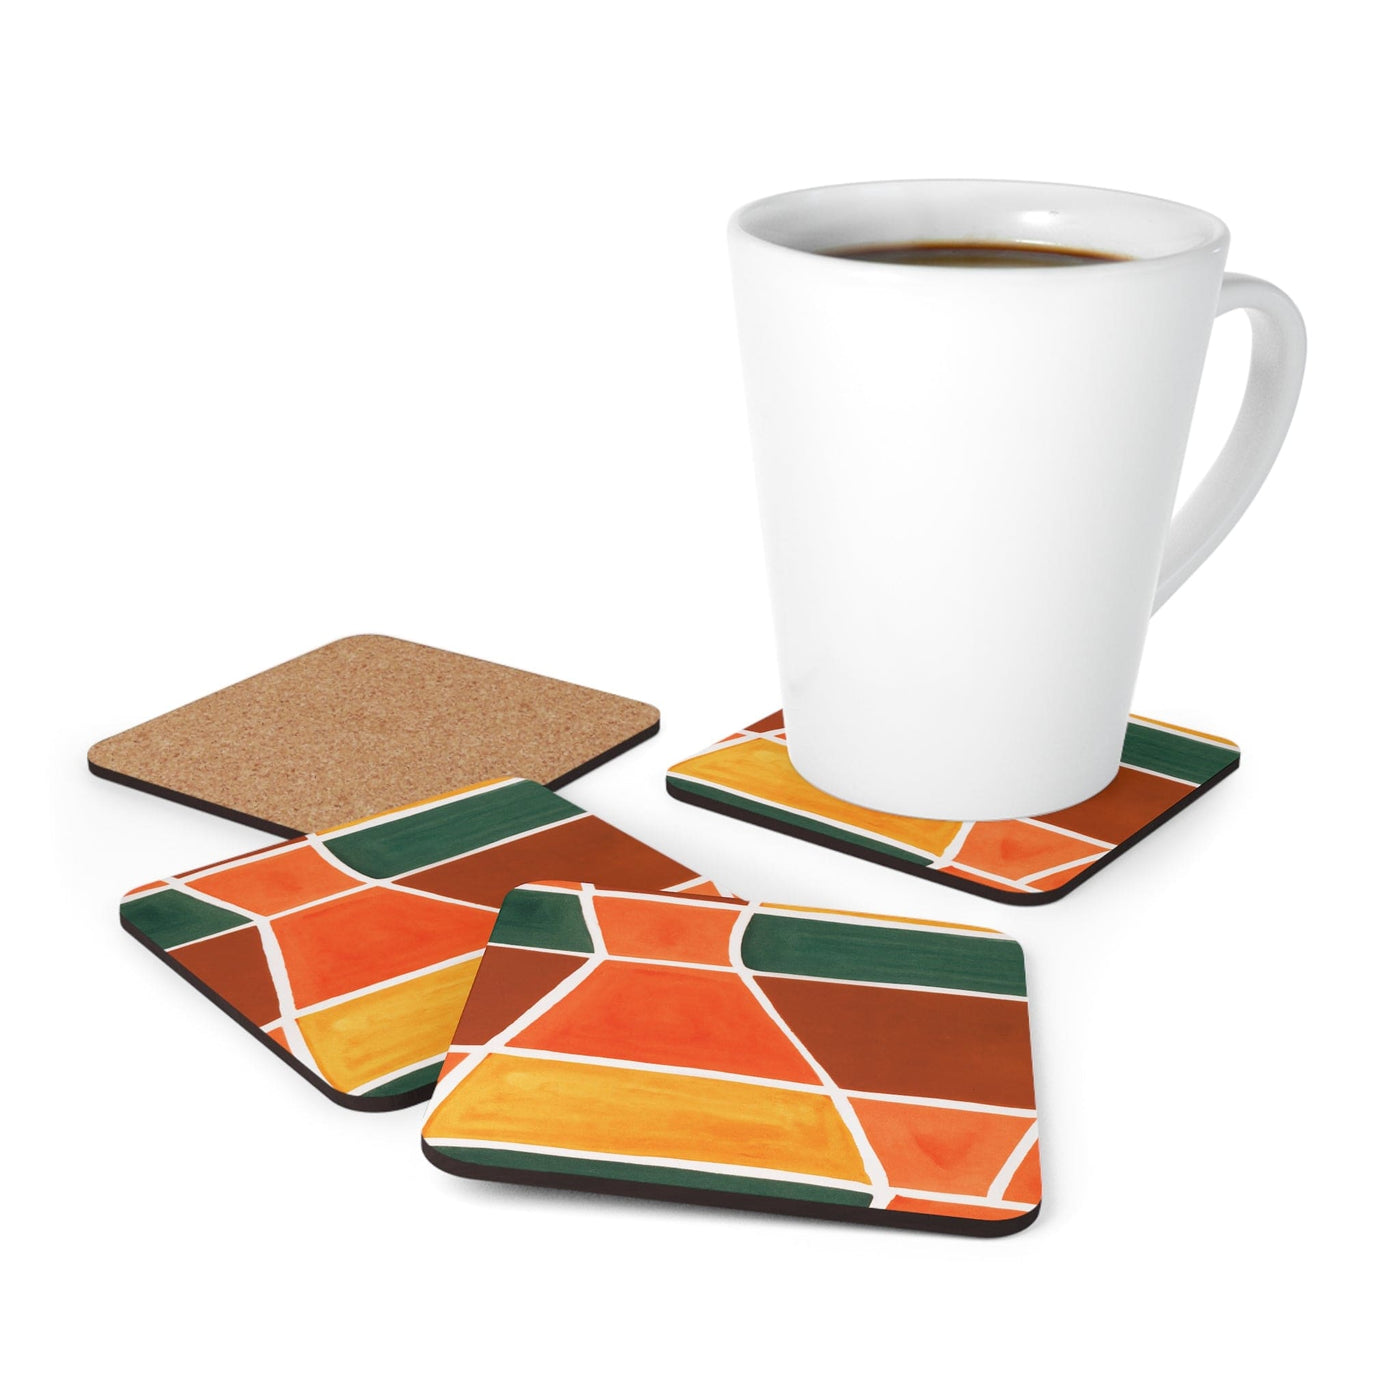 Coaster Set Of 4 For Drinks Orange Green Boho Pattern - Decorative | Coasters